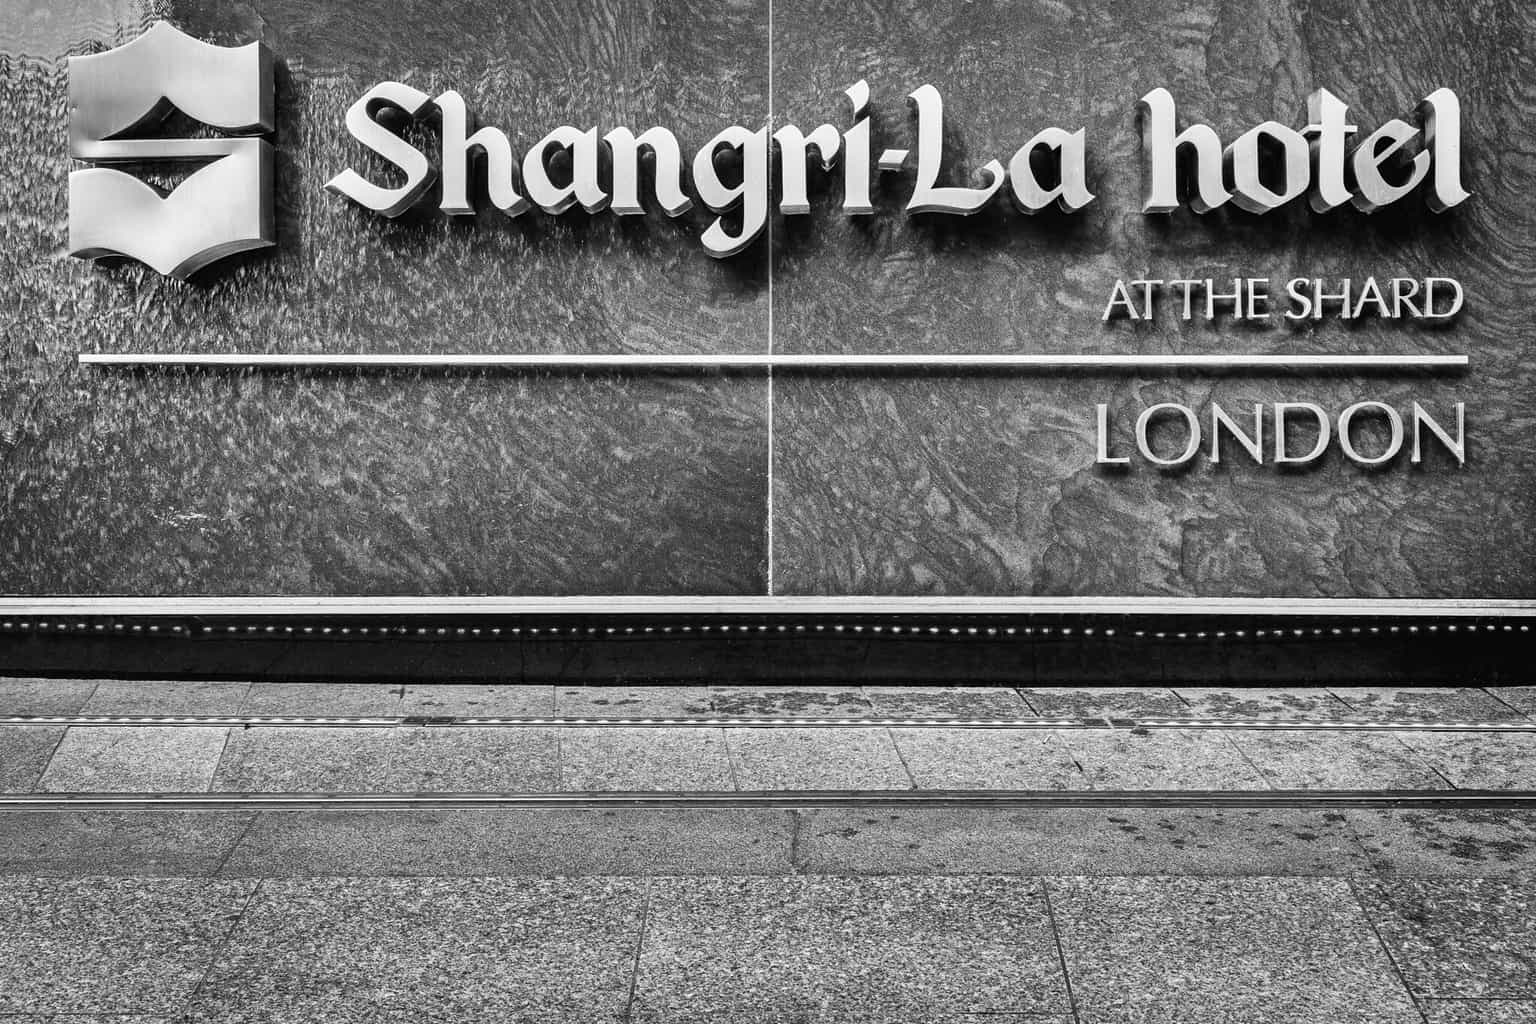  Shangri-La Hotel at The Shard, London 